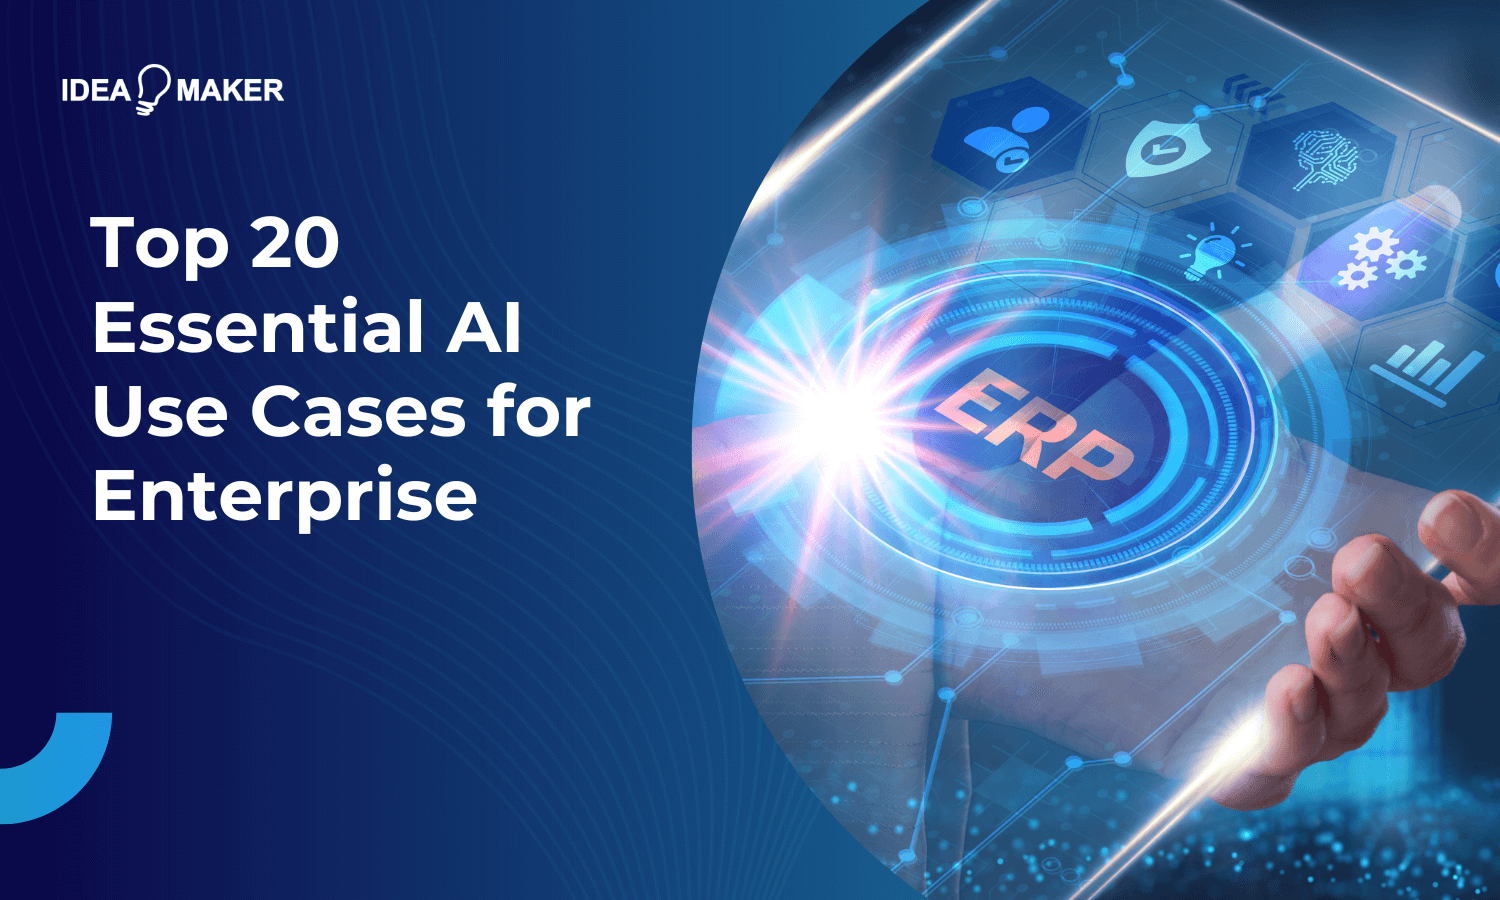 Idea Maker - Top 20 Essential AI Use Cases for Enterprise